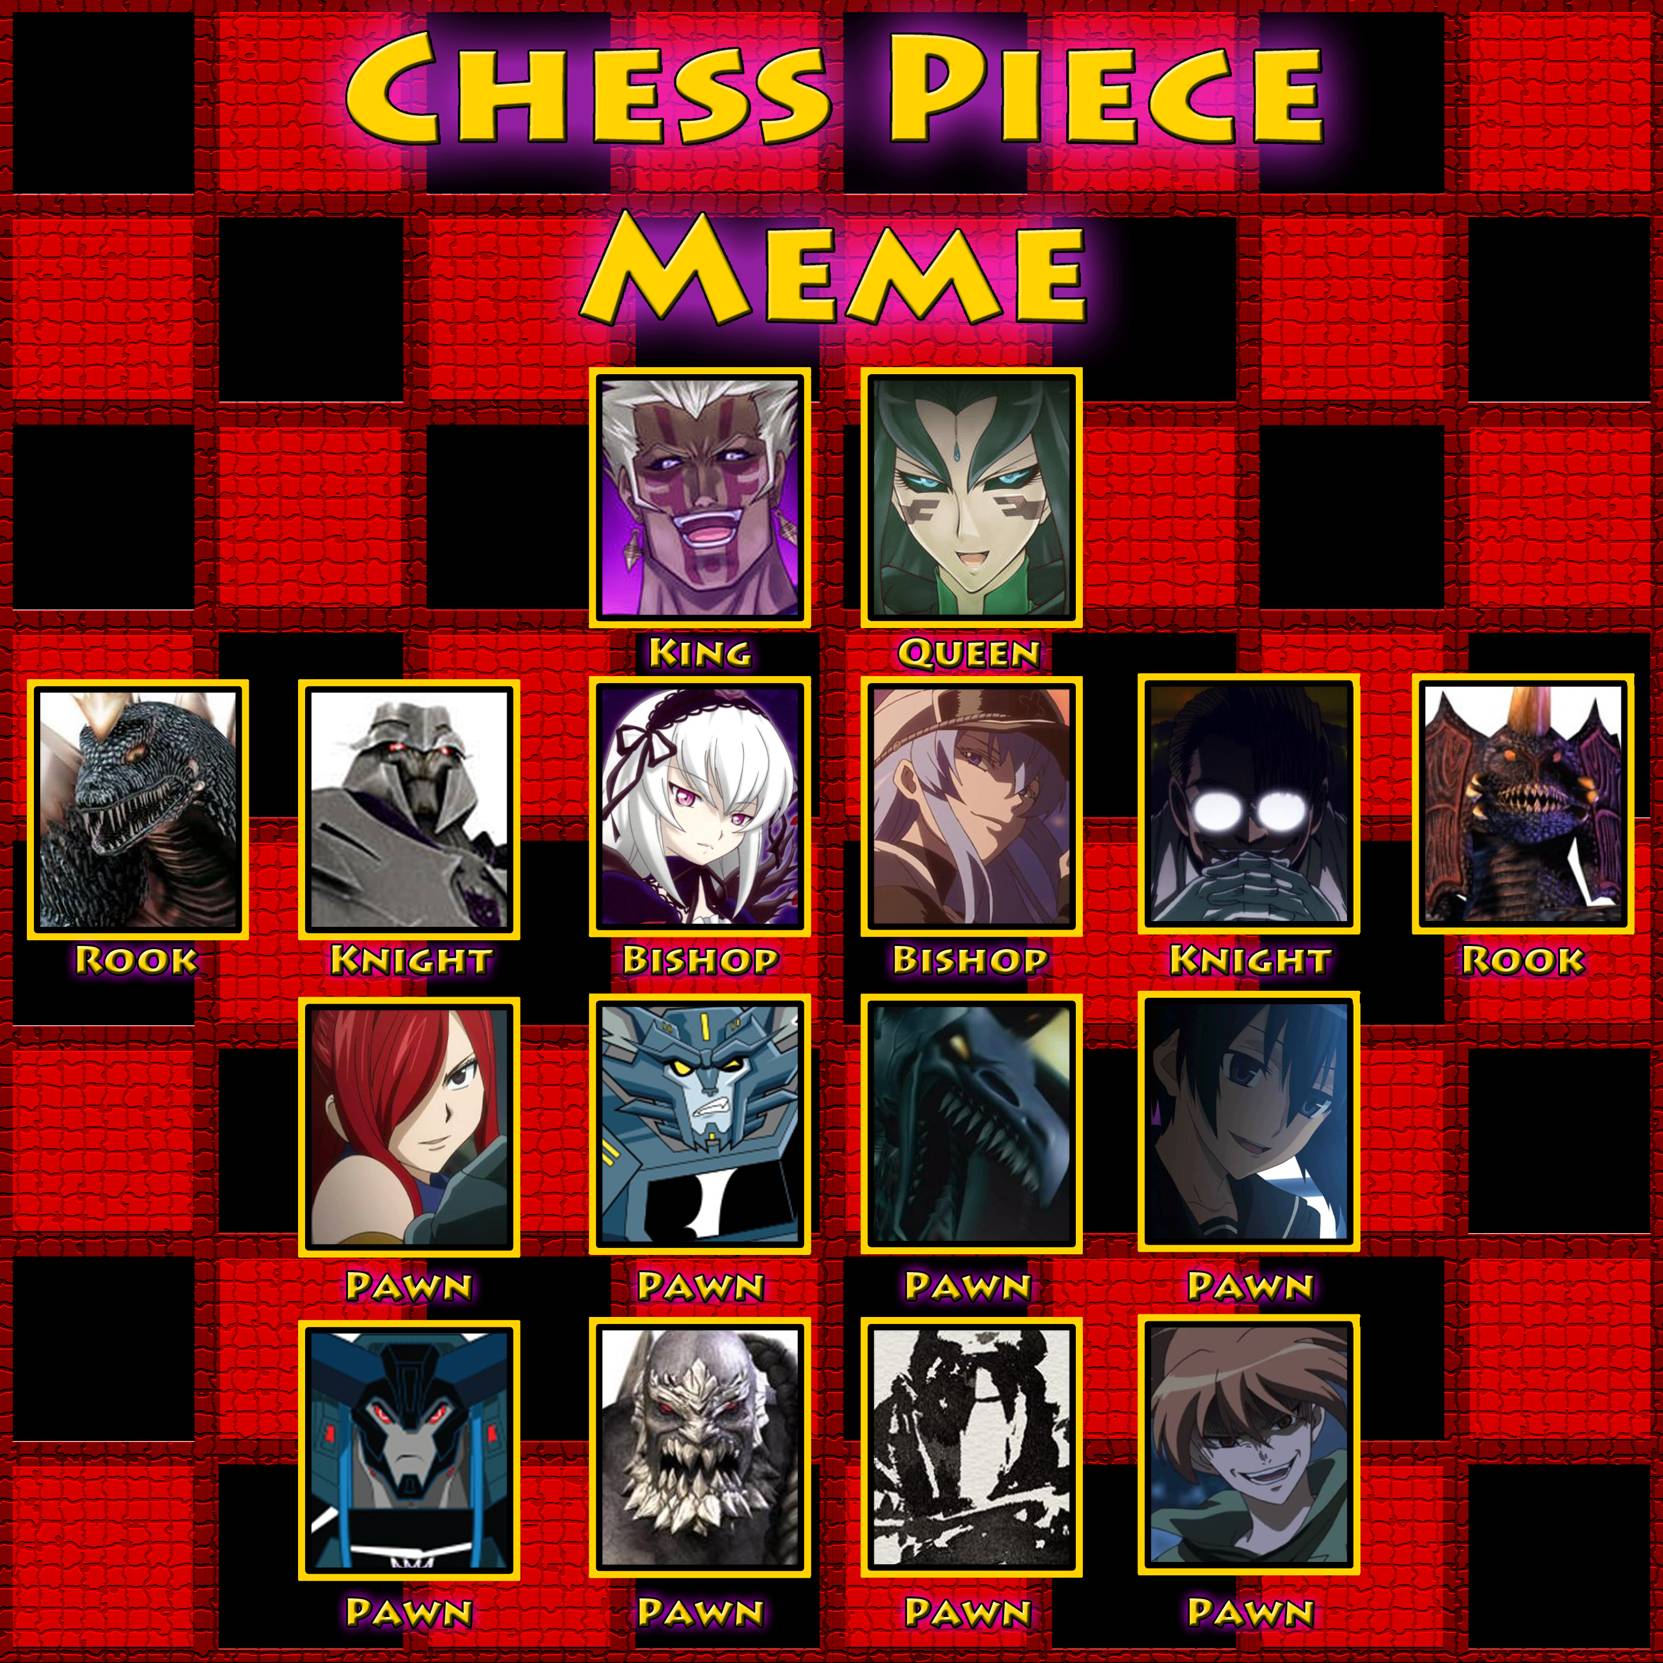 Culpado de ser horroroso #xadrez #chess #ajedrez #memes